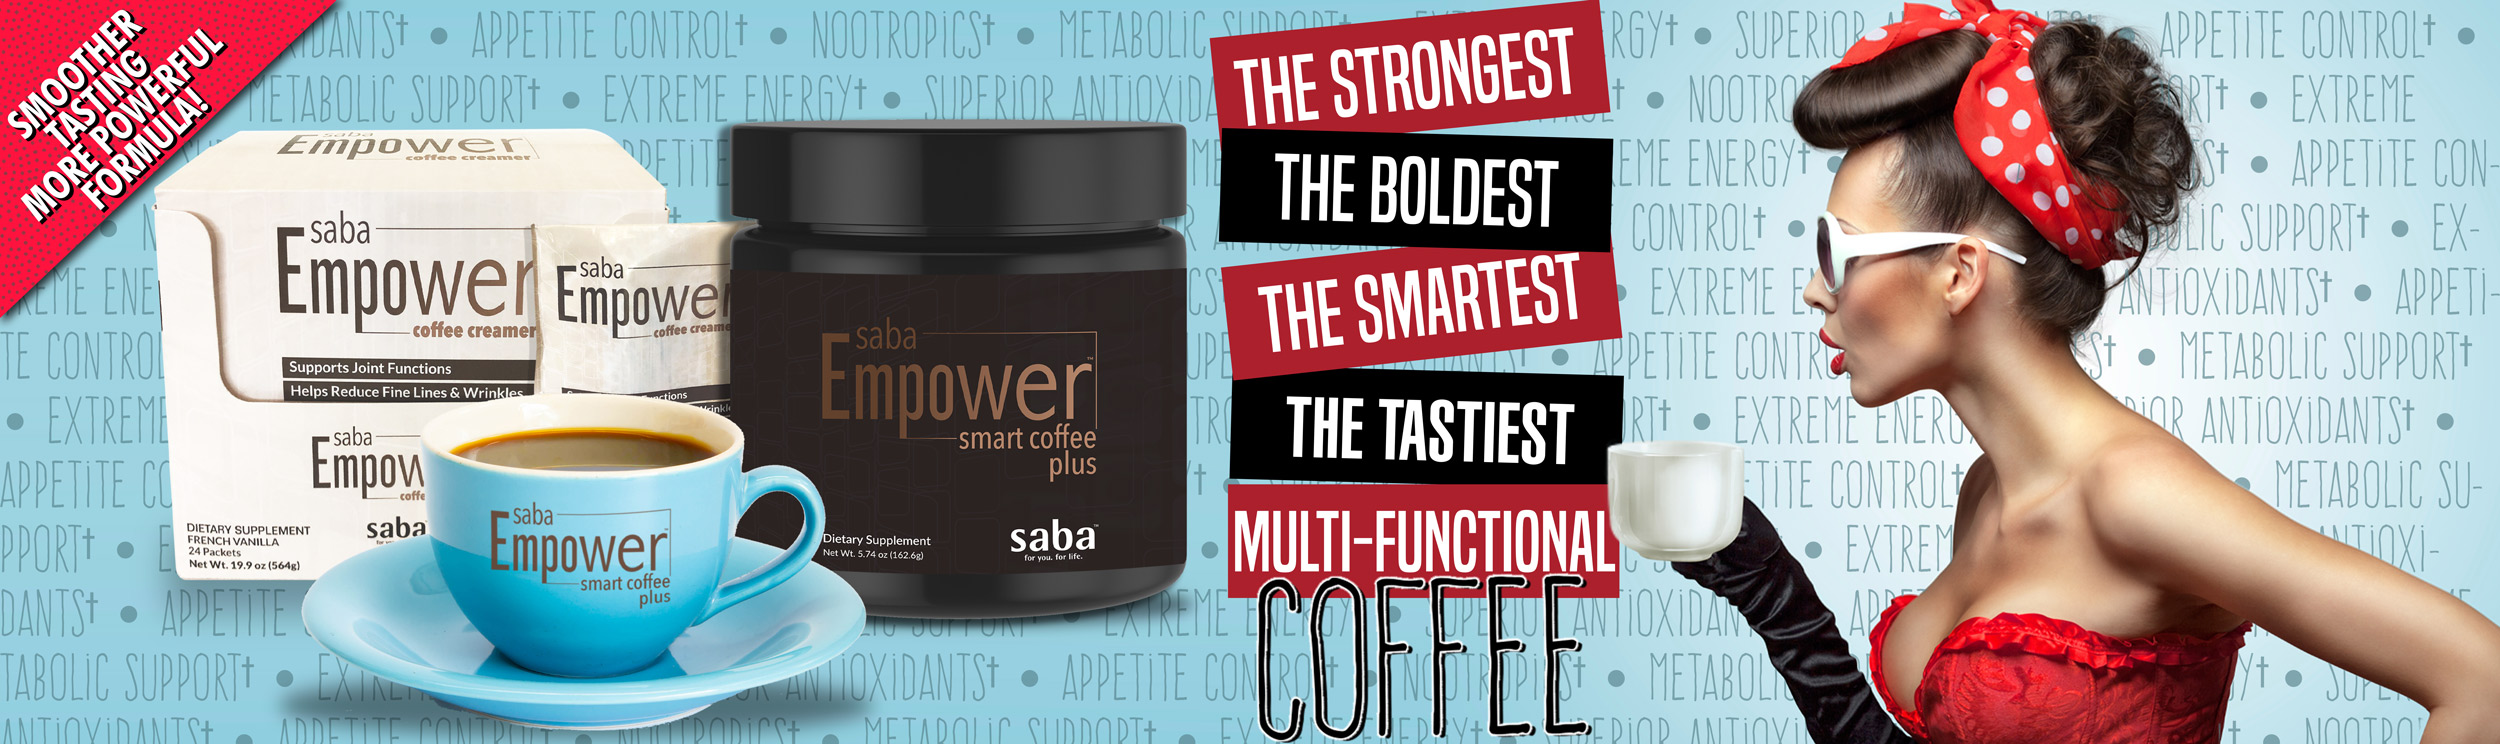 2 saba empower smart coffee plus fo 01 2500x744